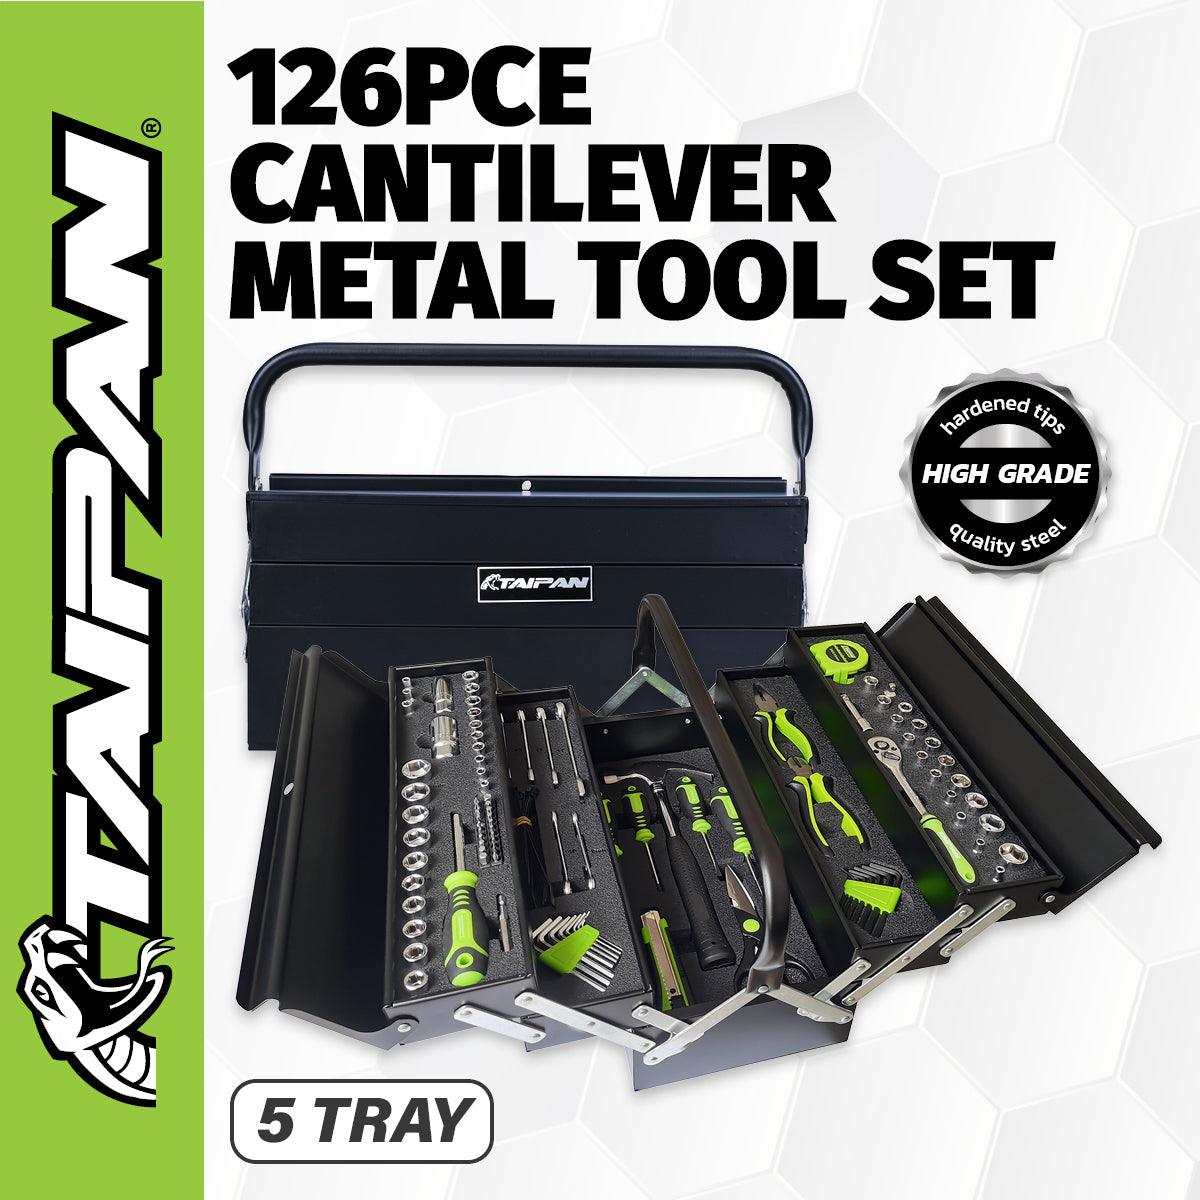 Taipan 126PCE 5 Tray Cantilever Metal Tool Set Premium Chrome Vanadium Steel